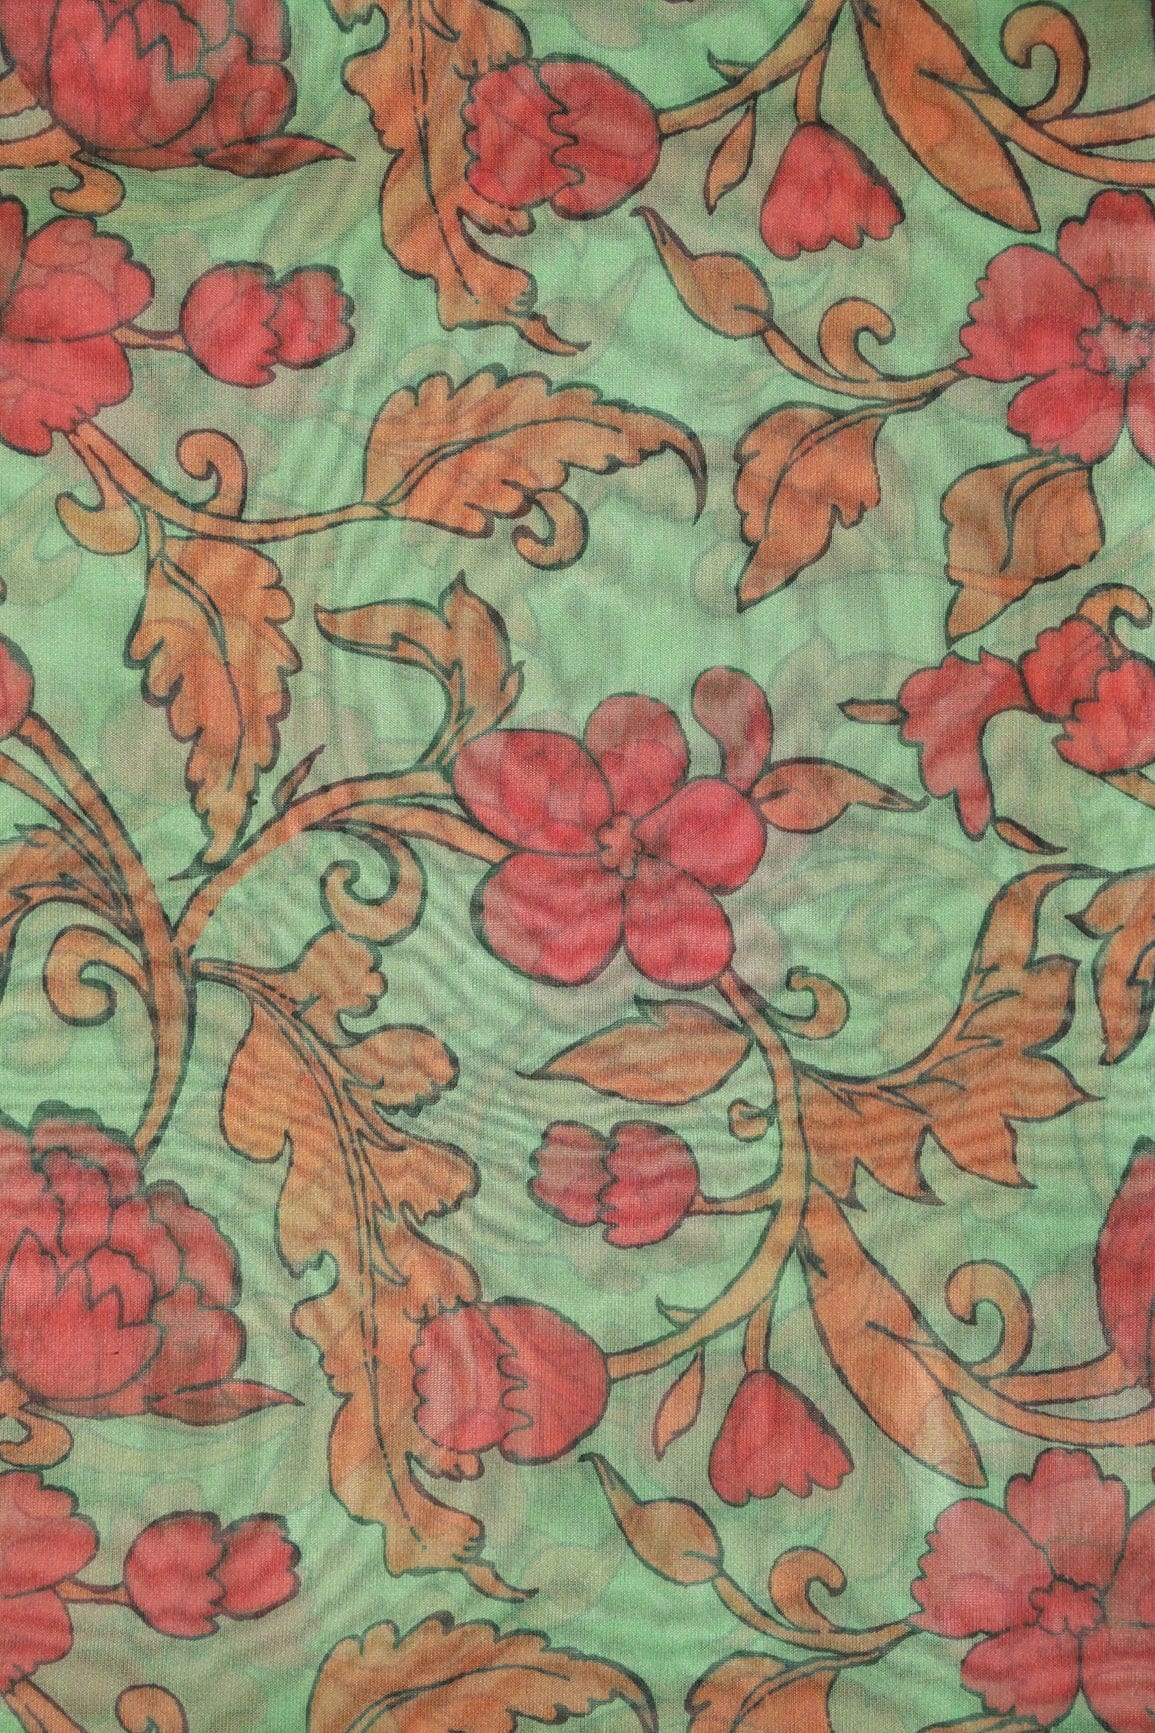 doeraa Prints Red And Orange Floral Digital Print On Sea Green Organza Fabric